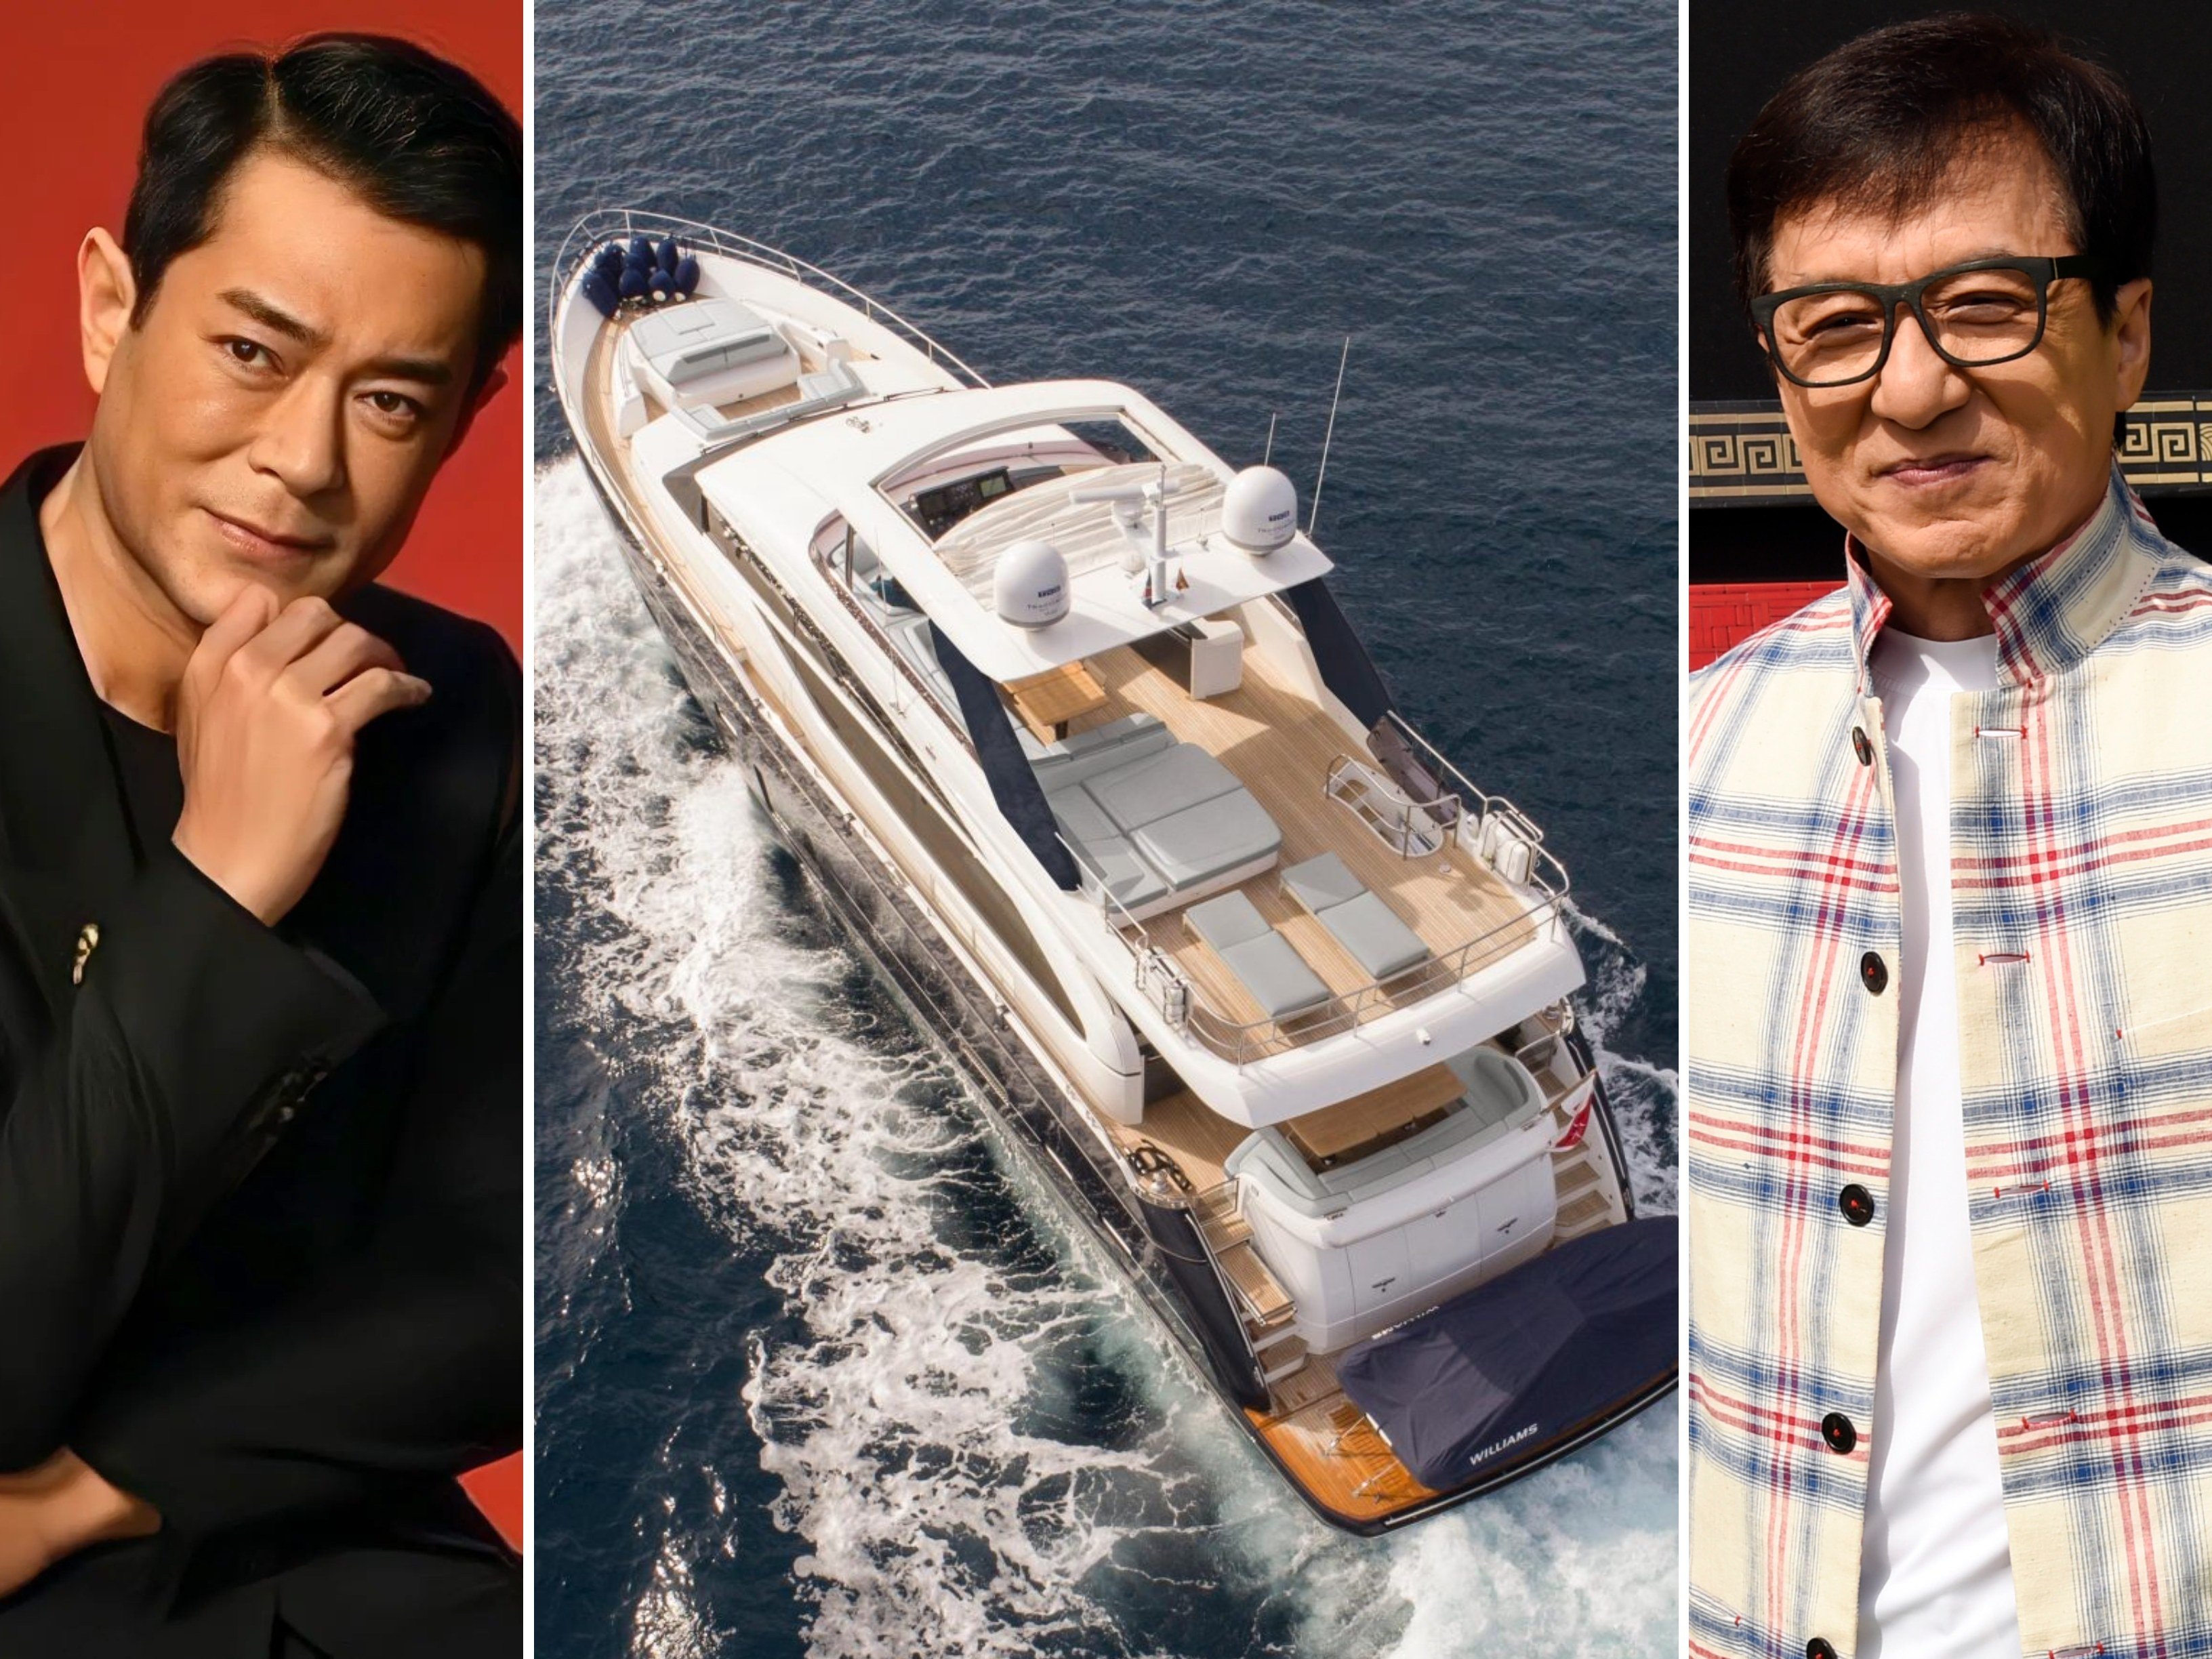 Hong Kong celebrities Louis Koo and Jackie Chan both own incredible superyachts. Photos: @louiskoozai/Instagram, Princess Yachts, AP